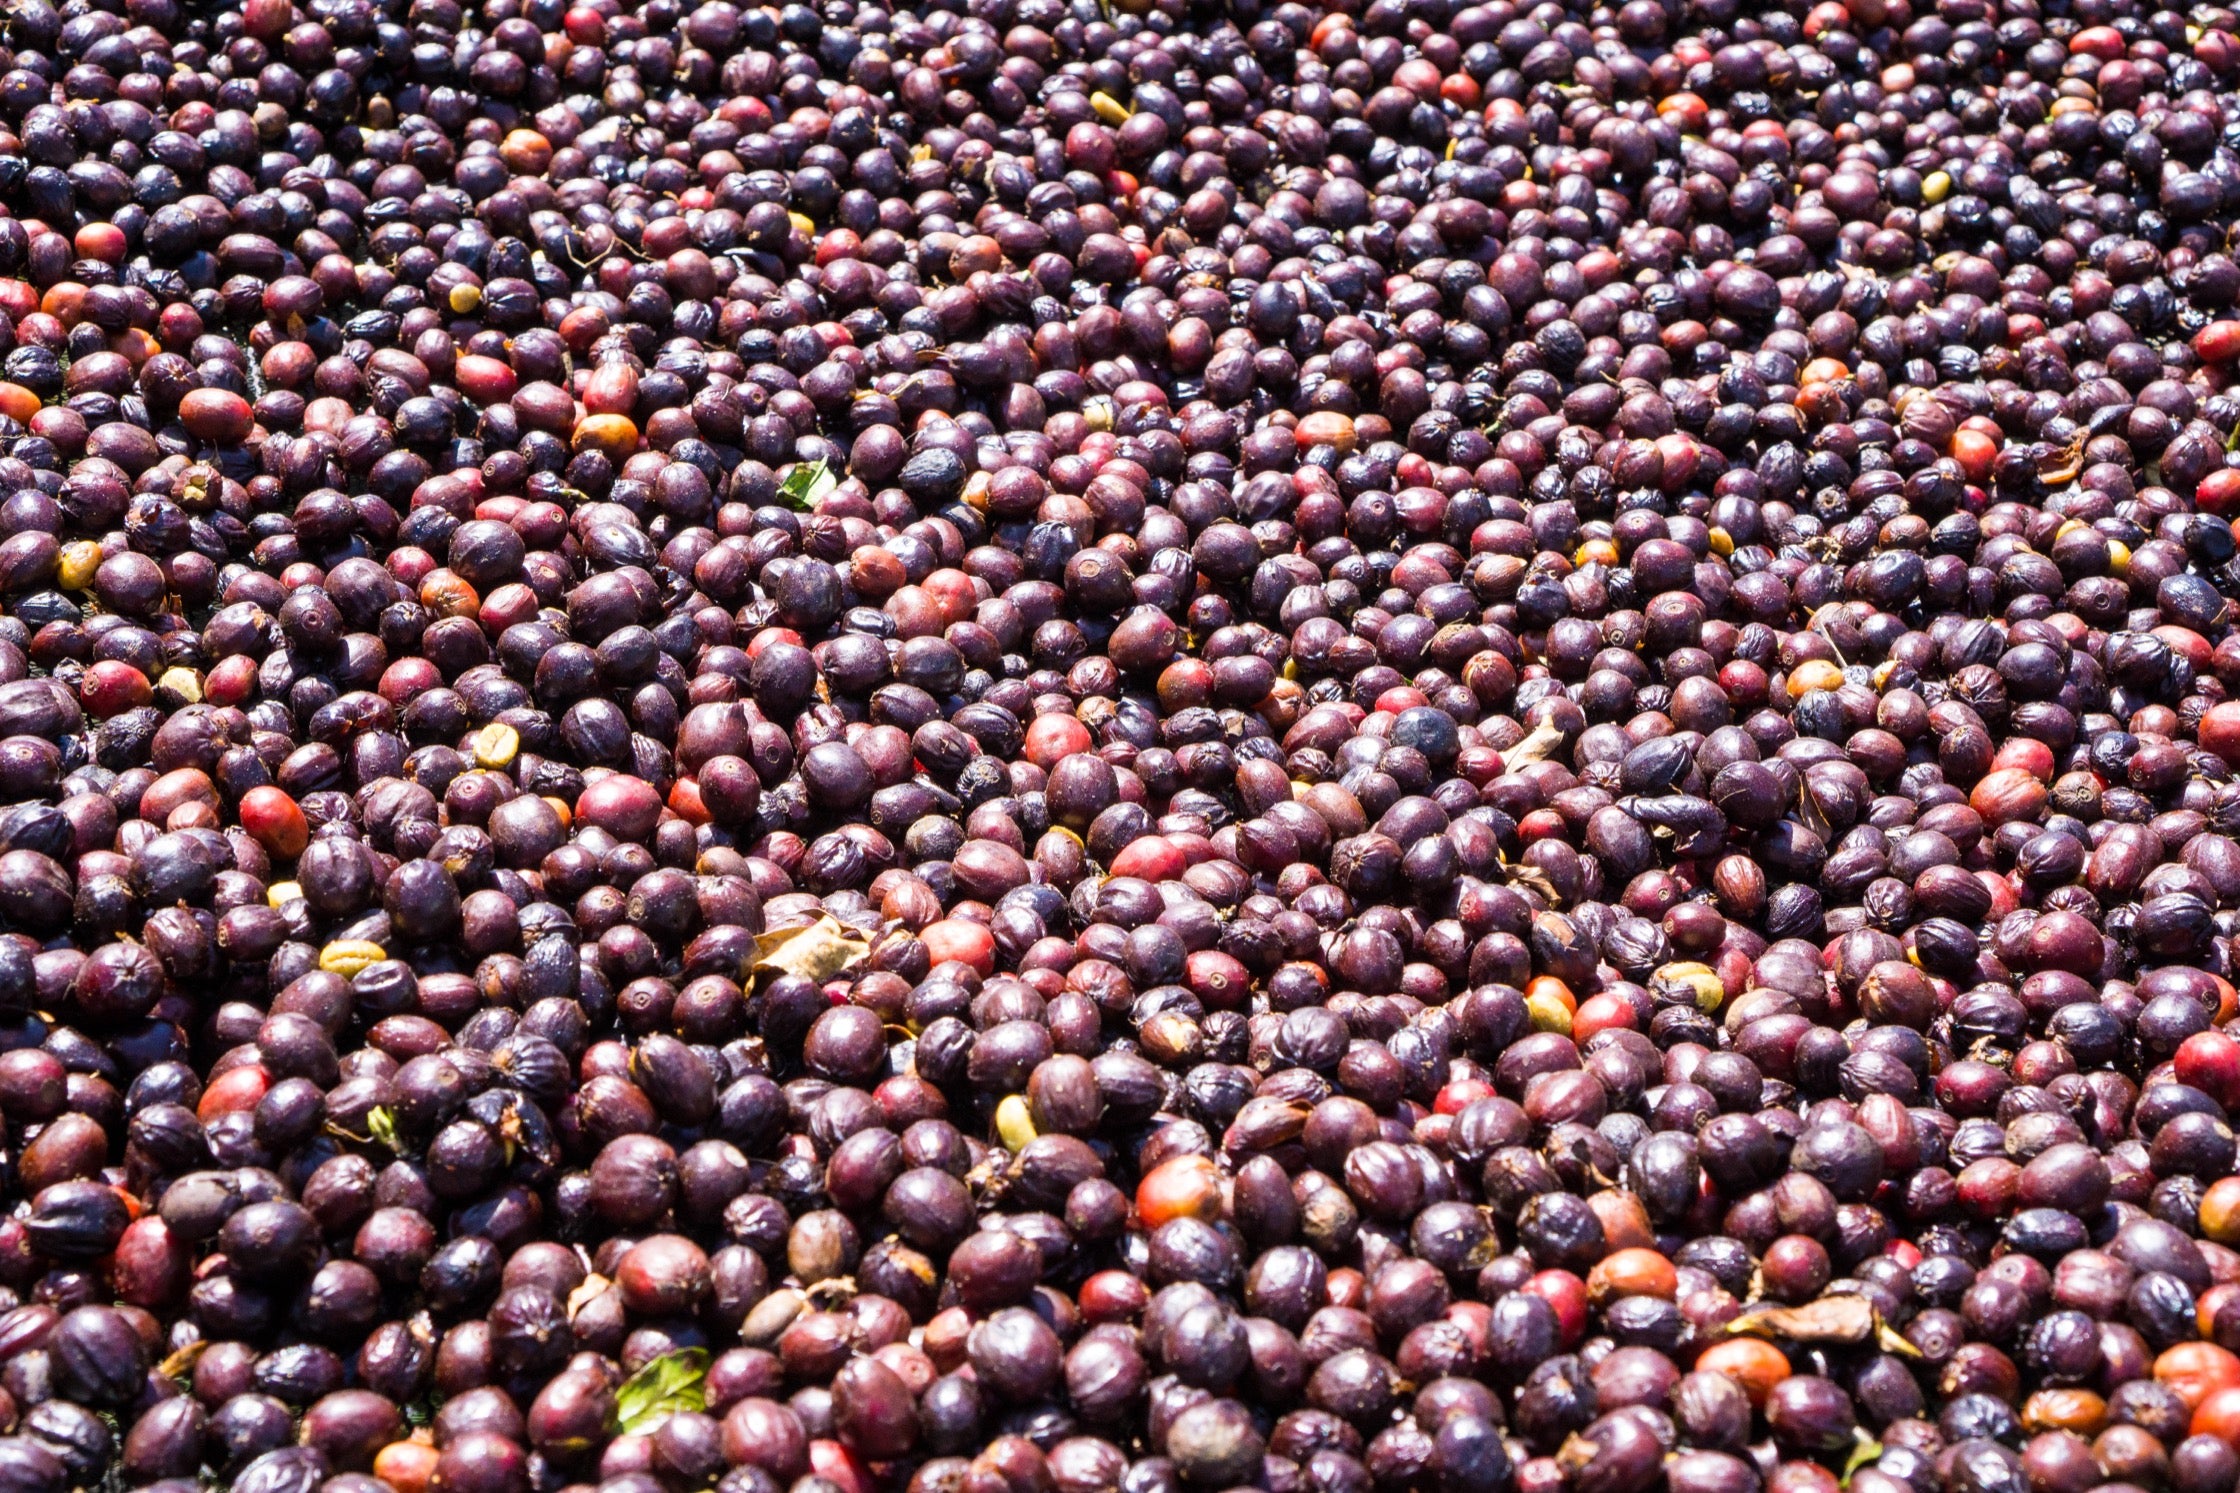 Harvested coffee cherries